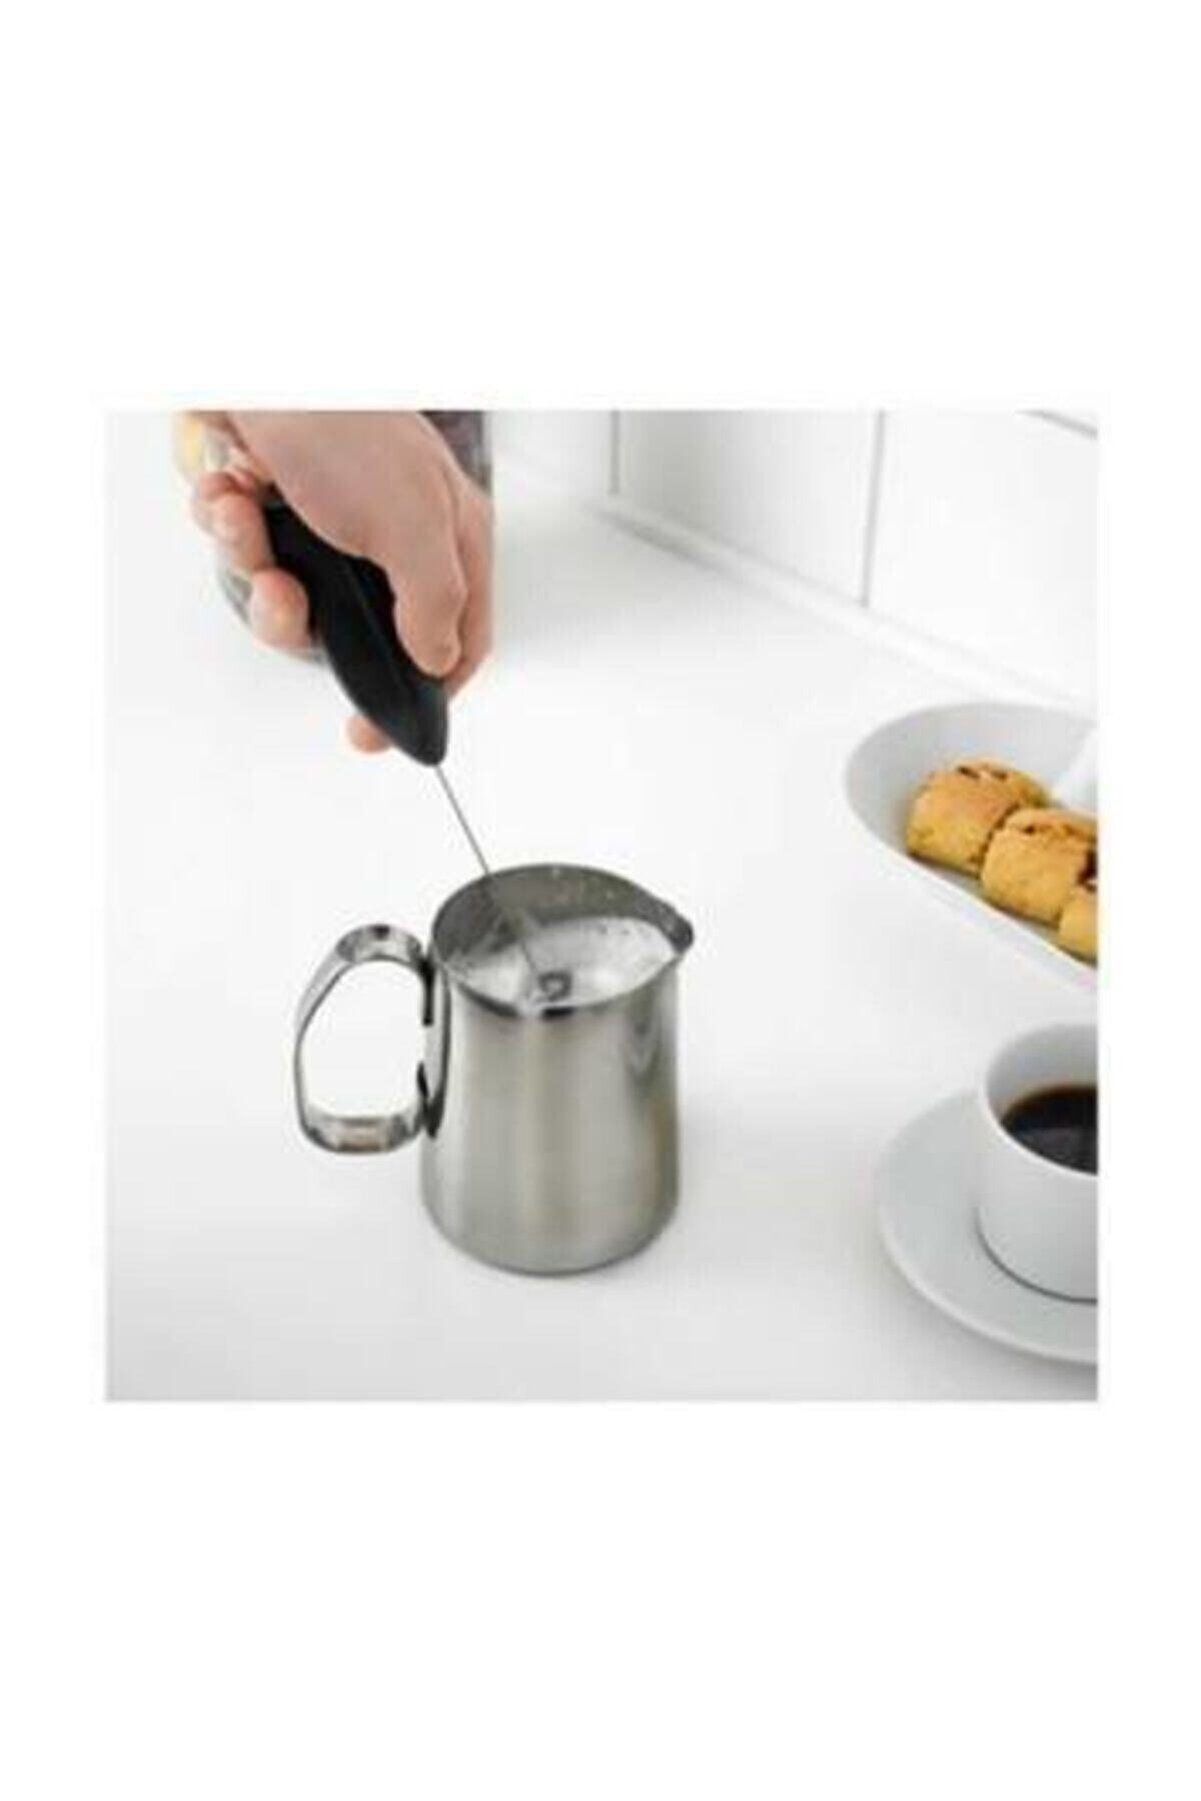 CHOKE Pilli Mini Mixer Kahve Süt Köpürtücü Karıştırıcı Cappuccino Mixer